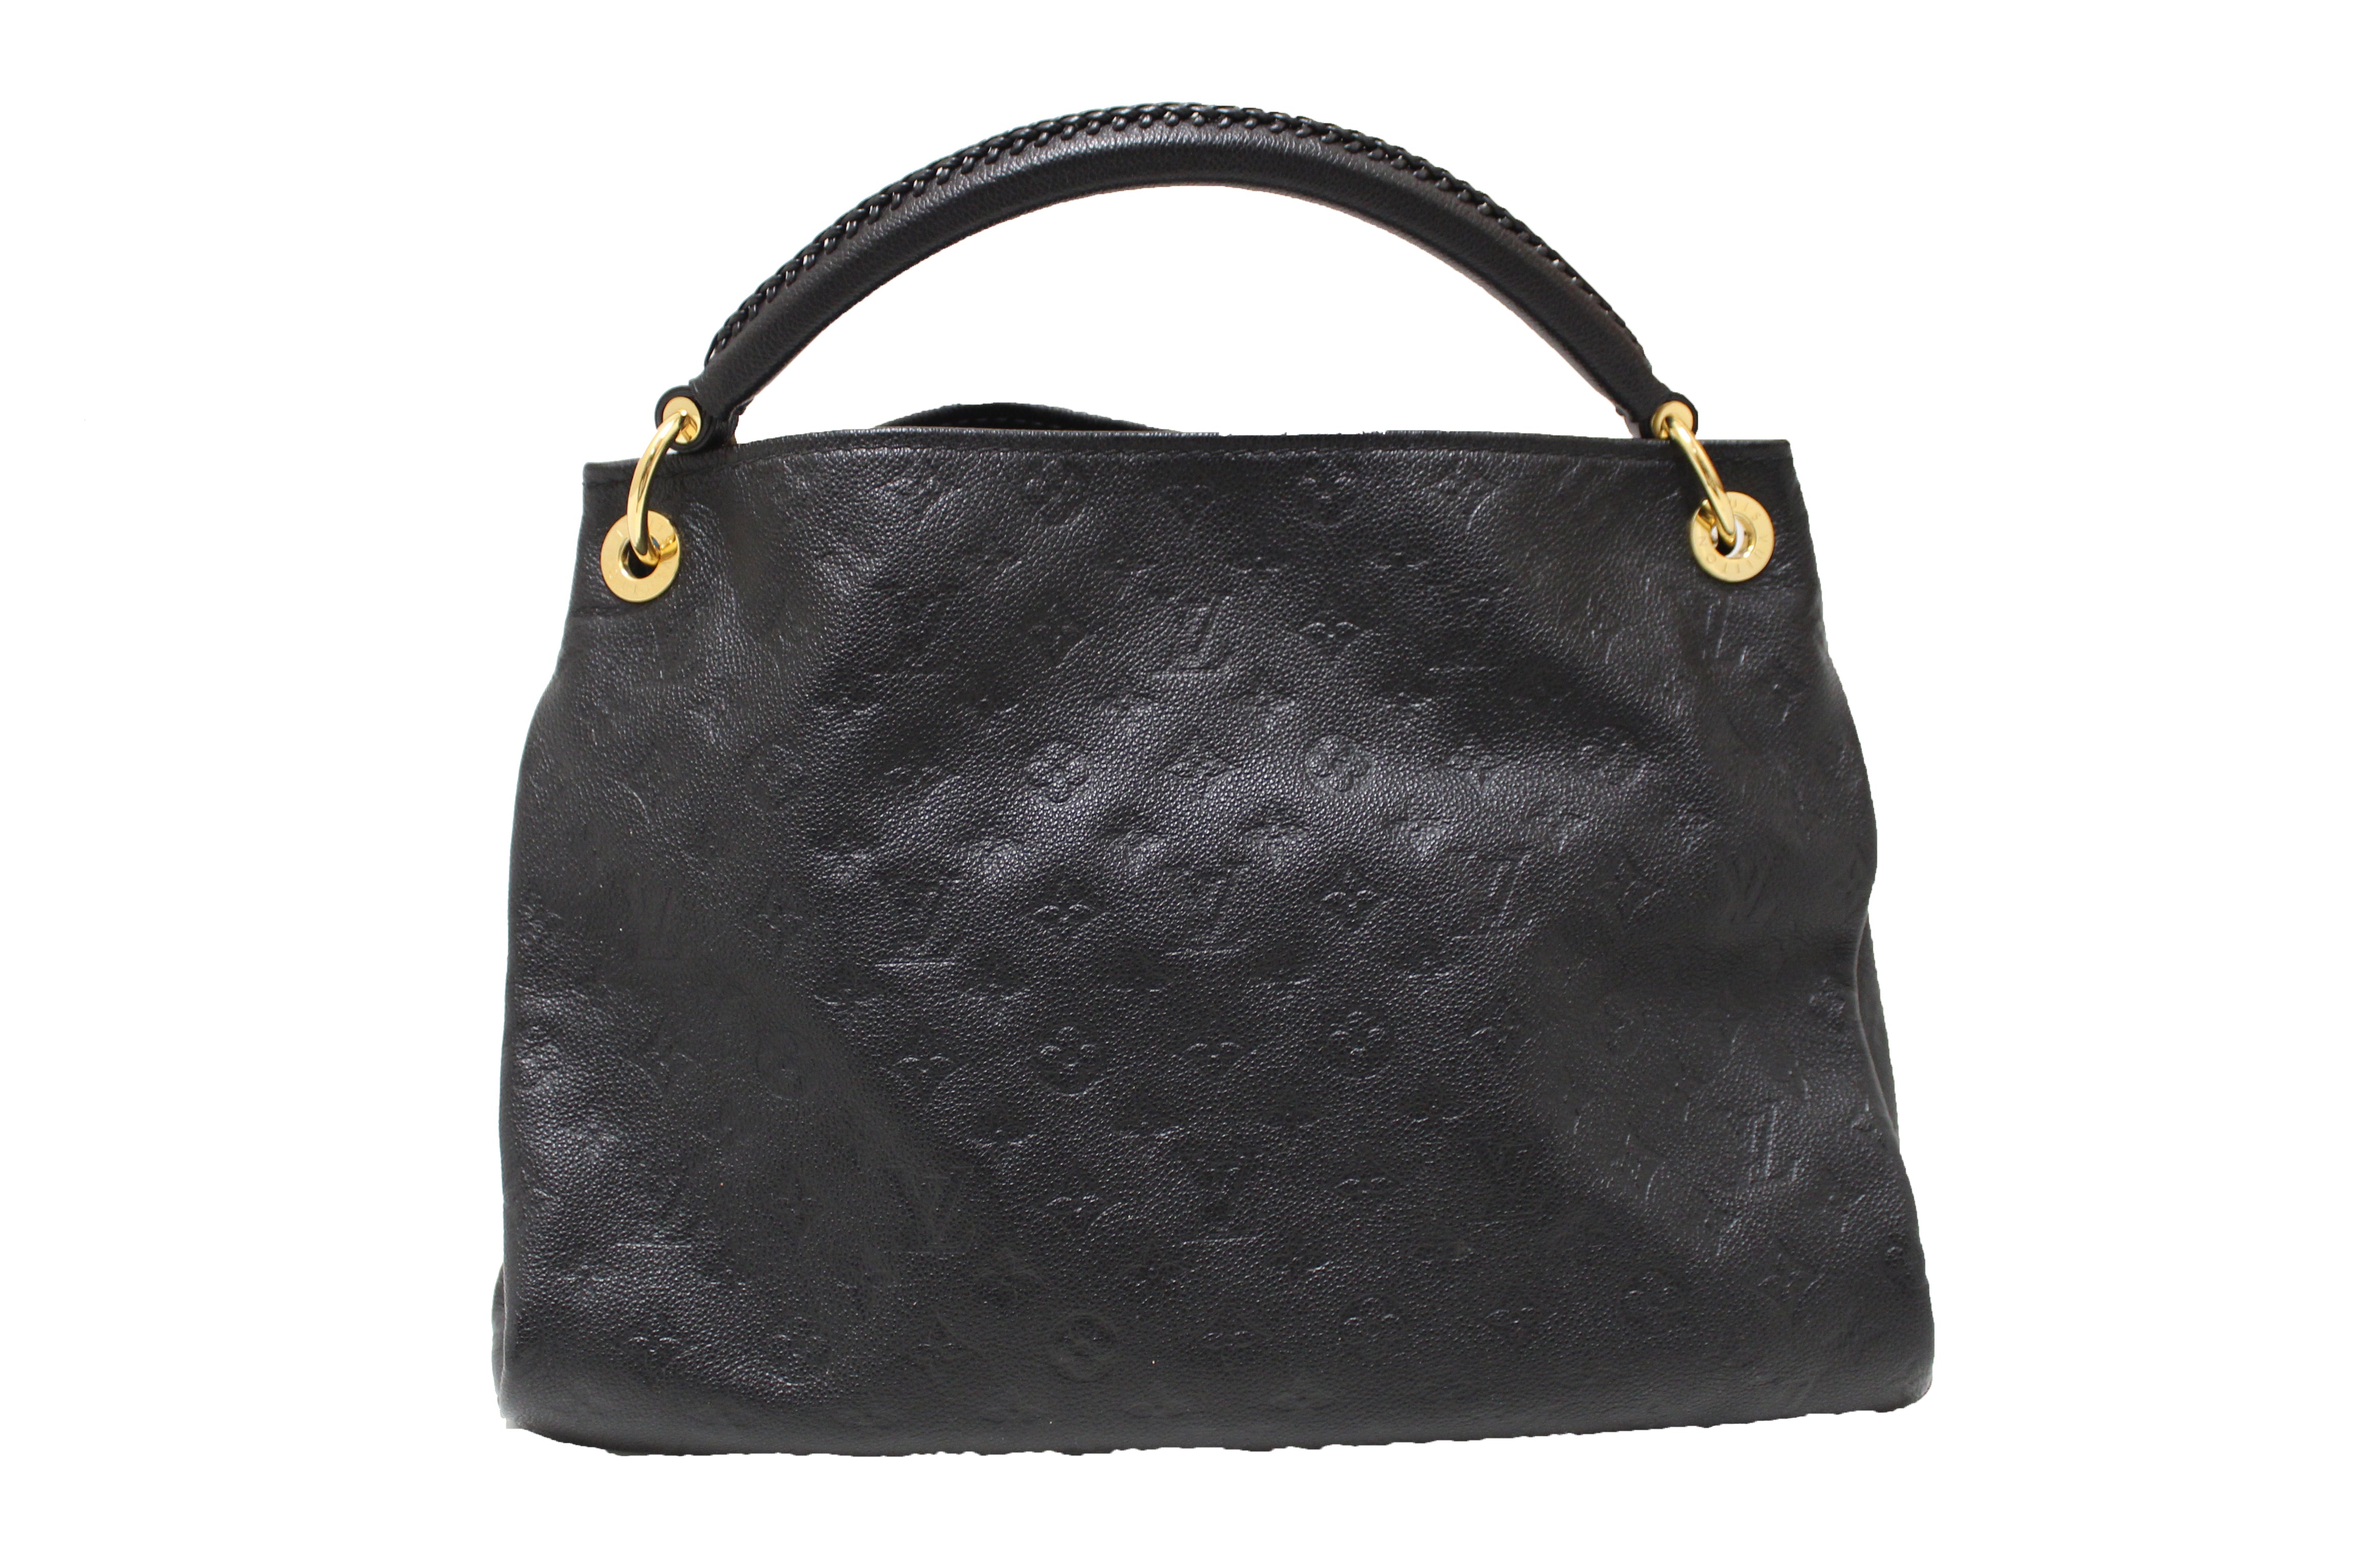 Authentic Louis Vuitton Empreinte Leather Artsy MM Hobo Bag